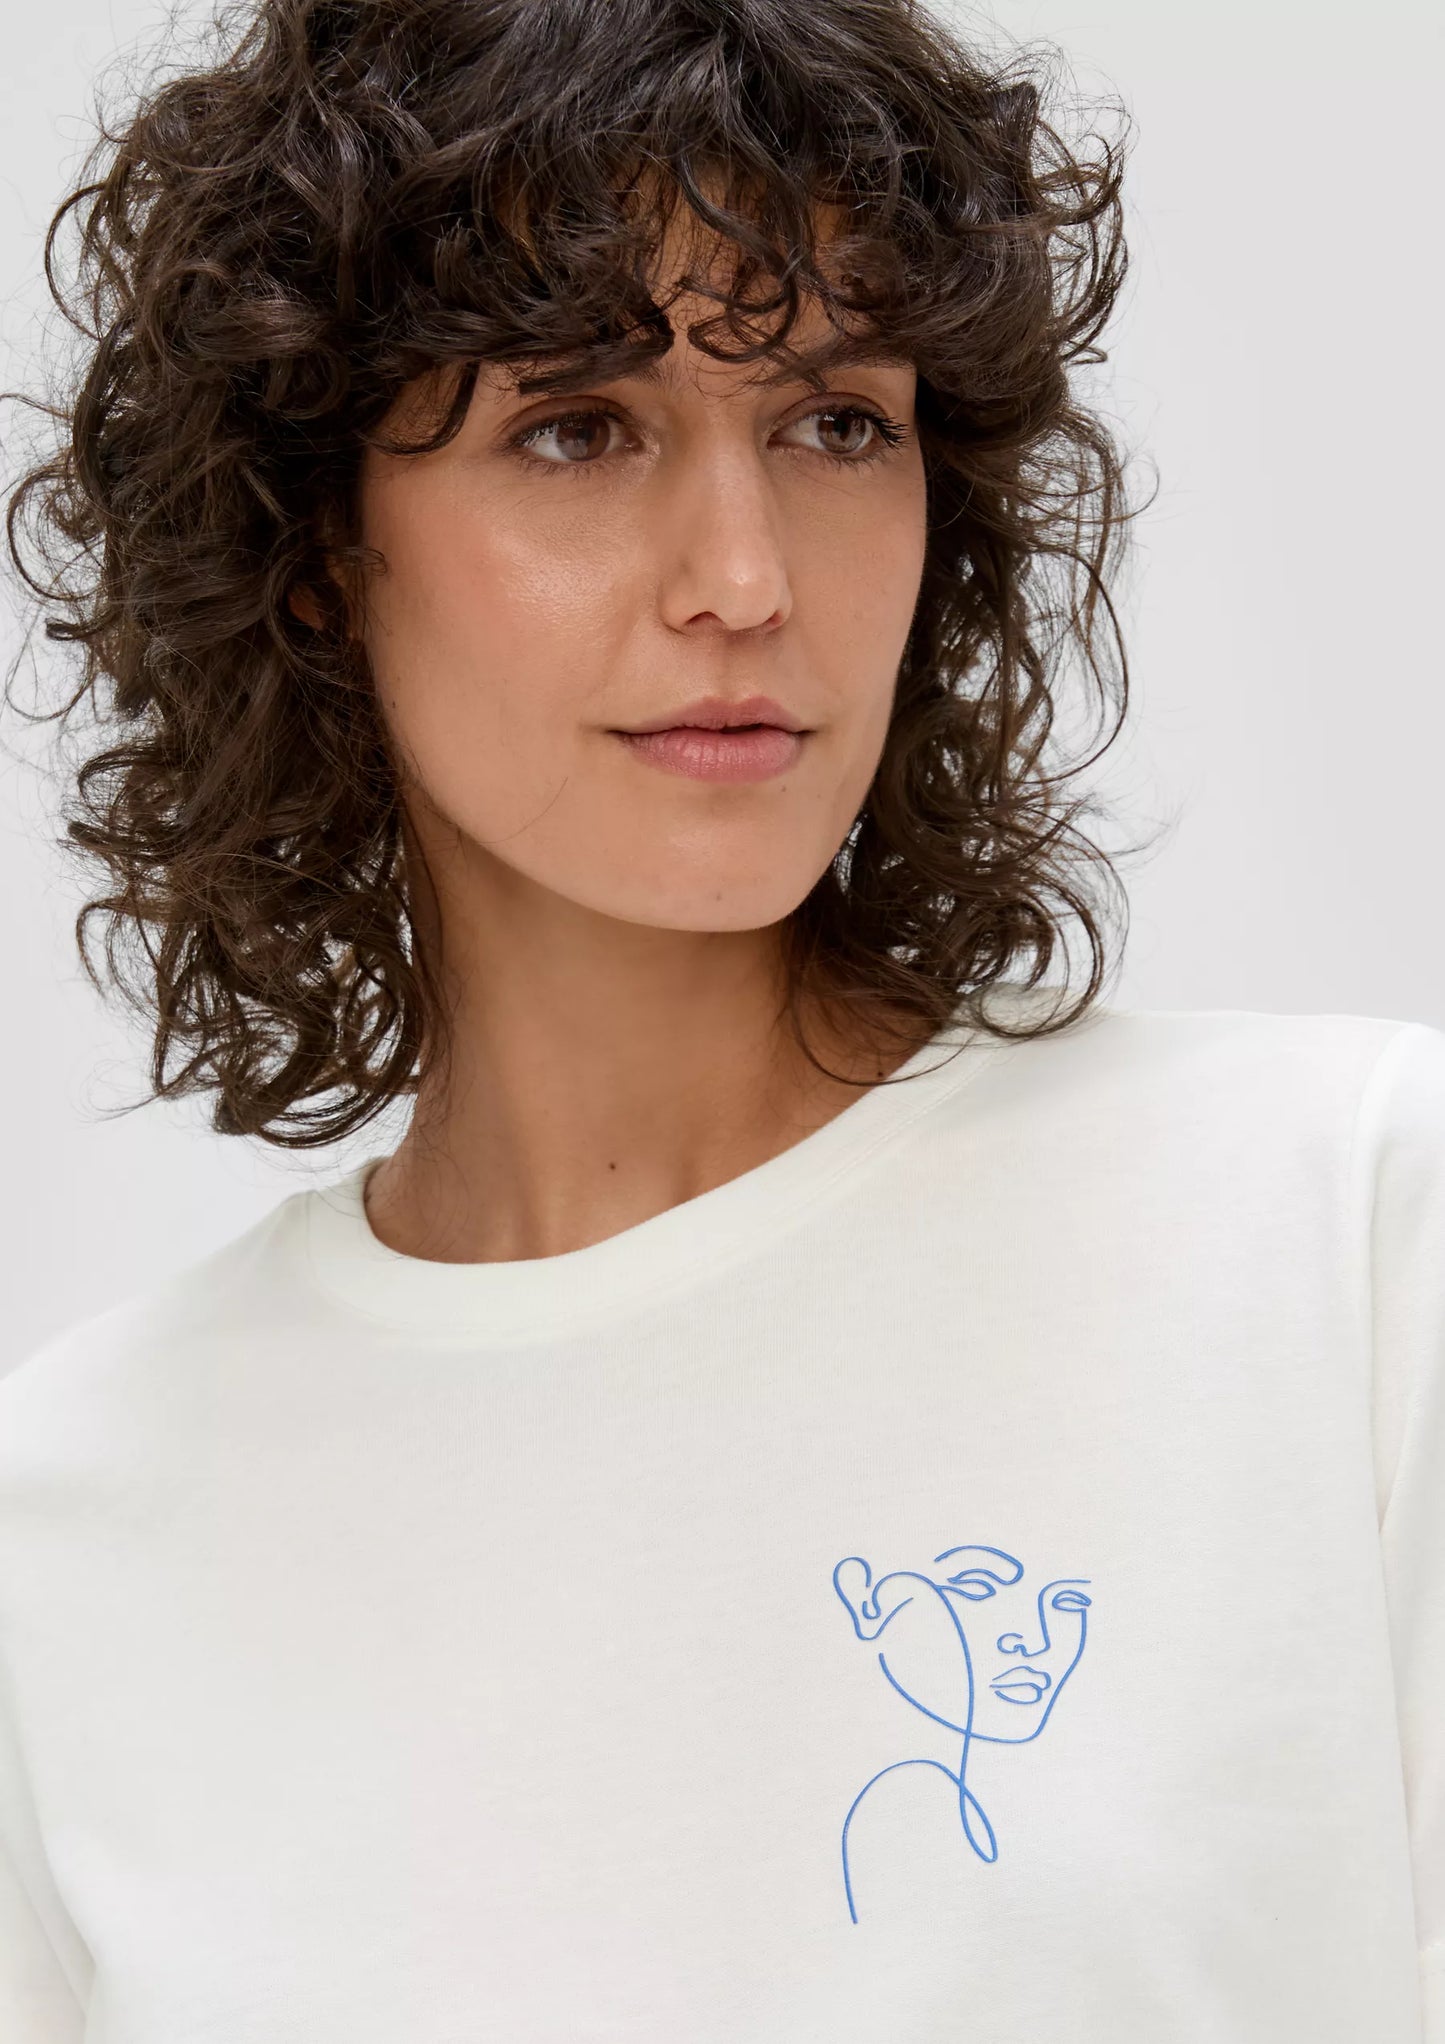 S.Oliver T-Shirt-White with striking design